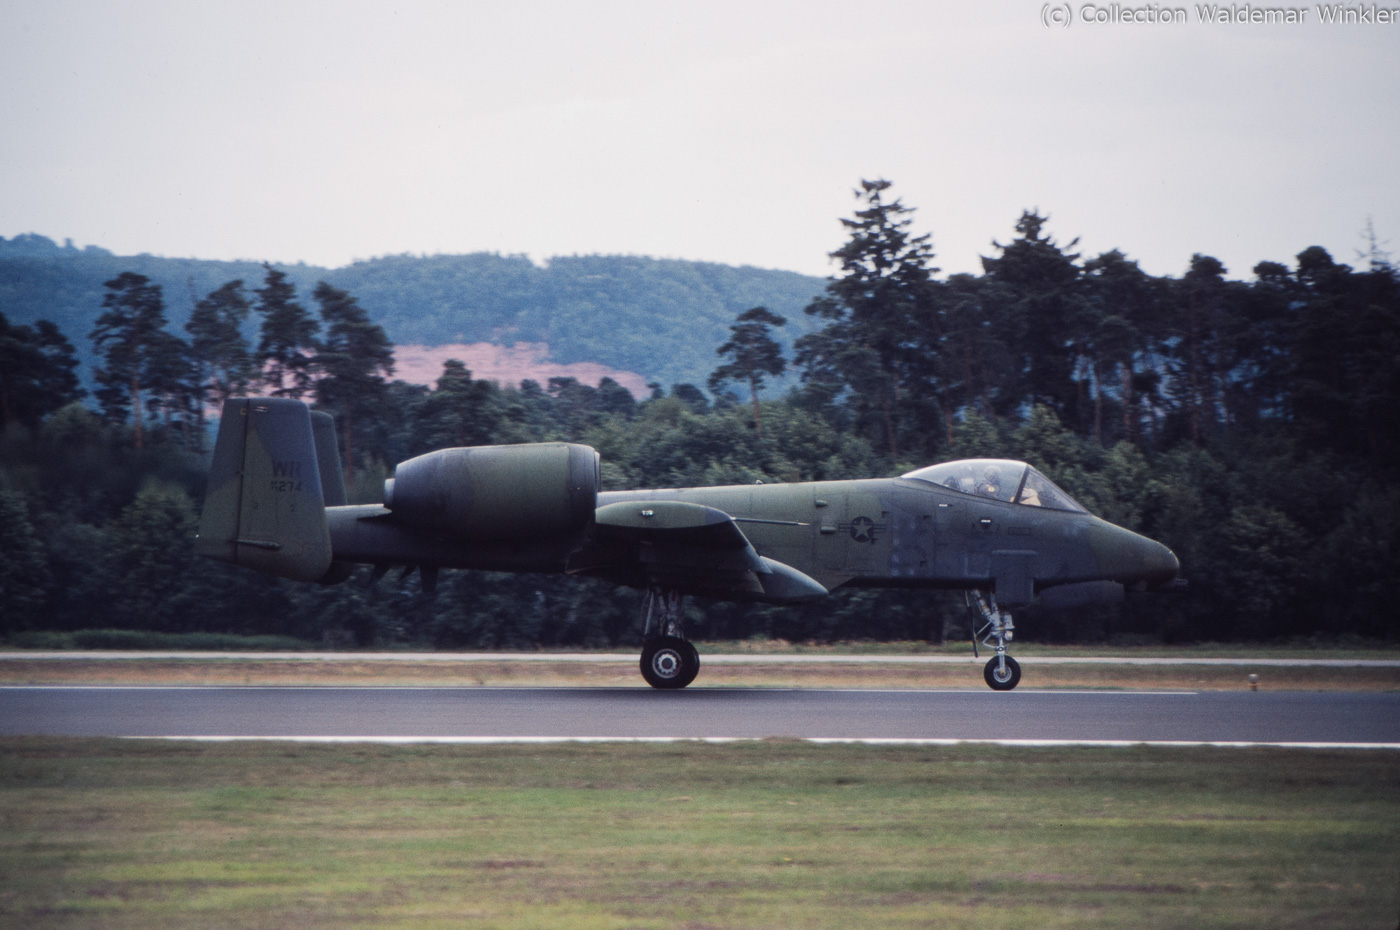 A-10_Thunderbolt_II_DSC_3090.jpg